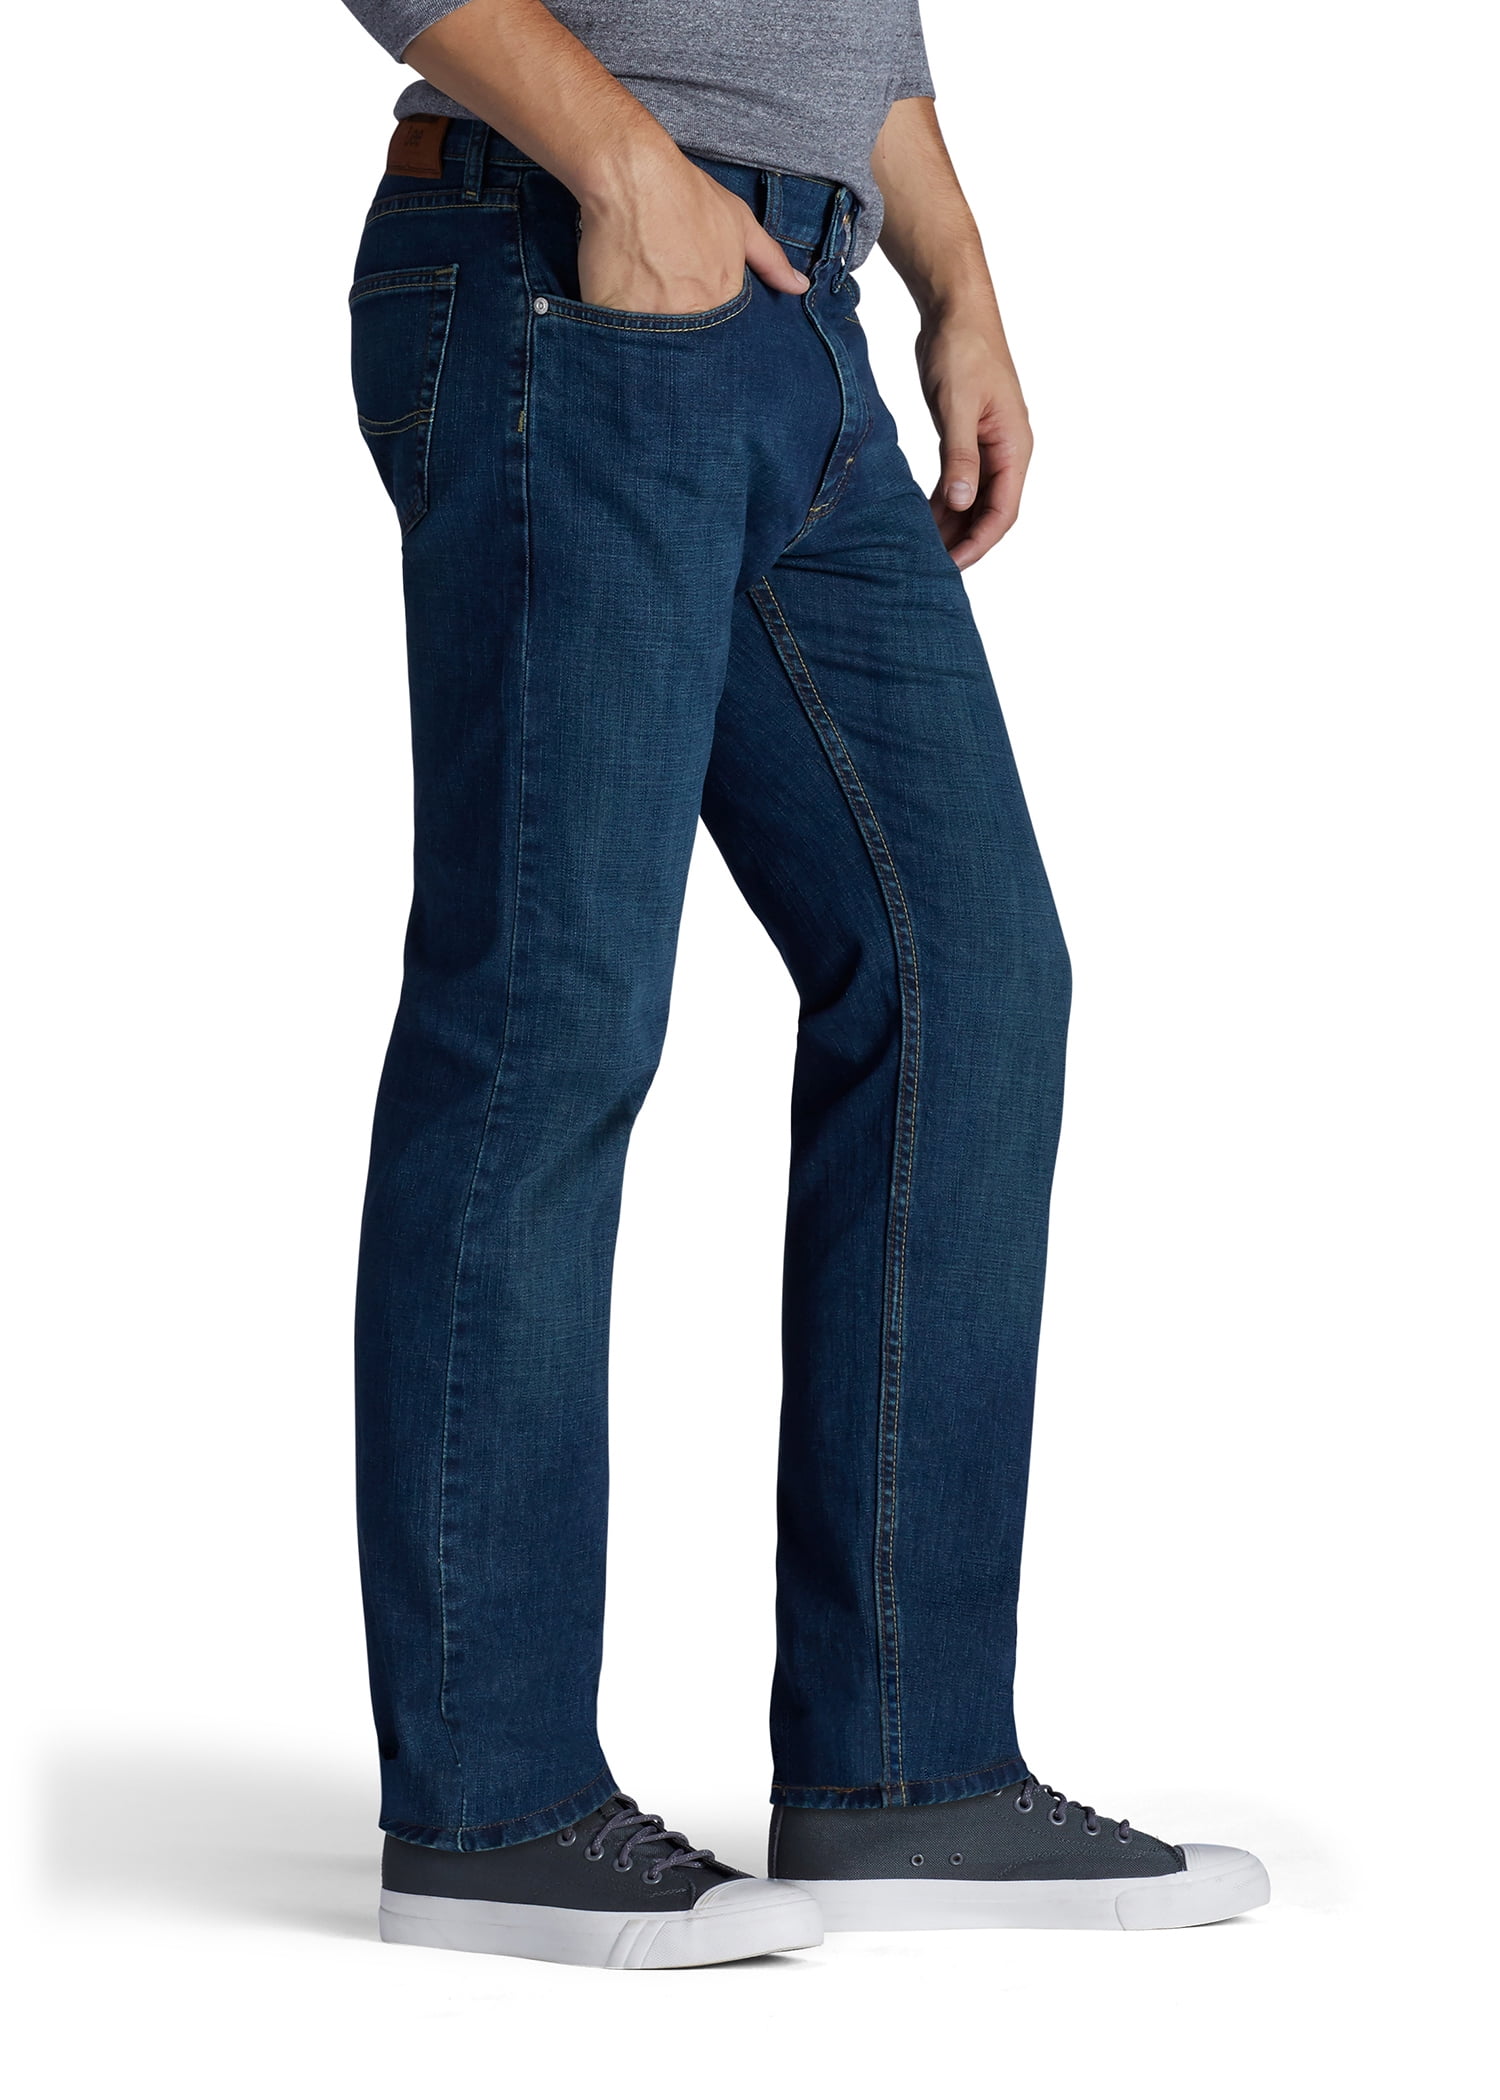 lee premium select classic fit jeans